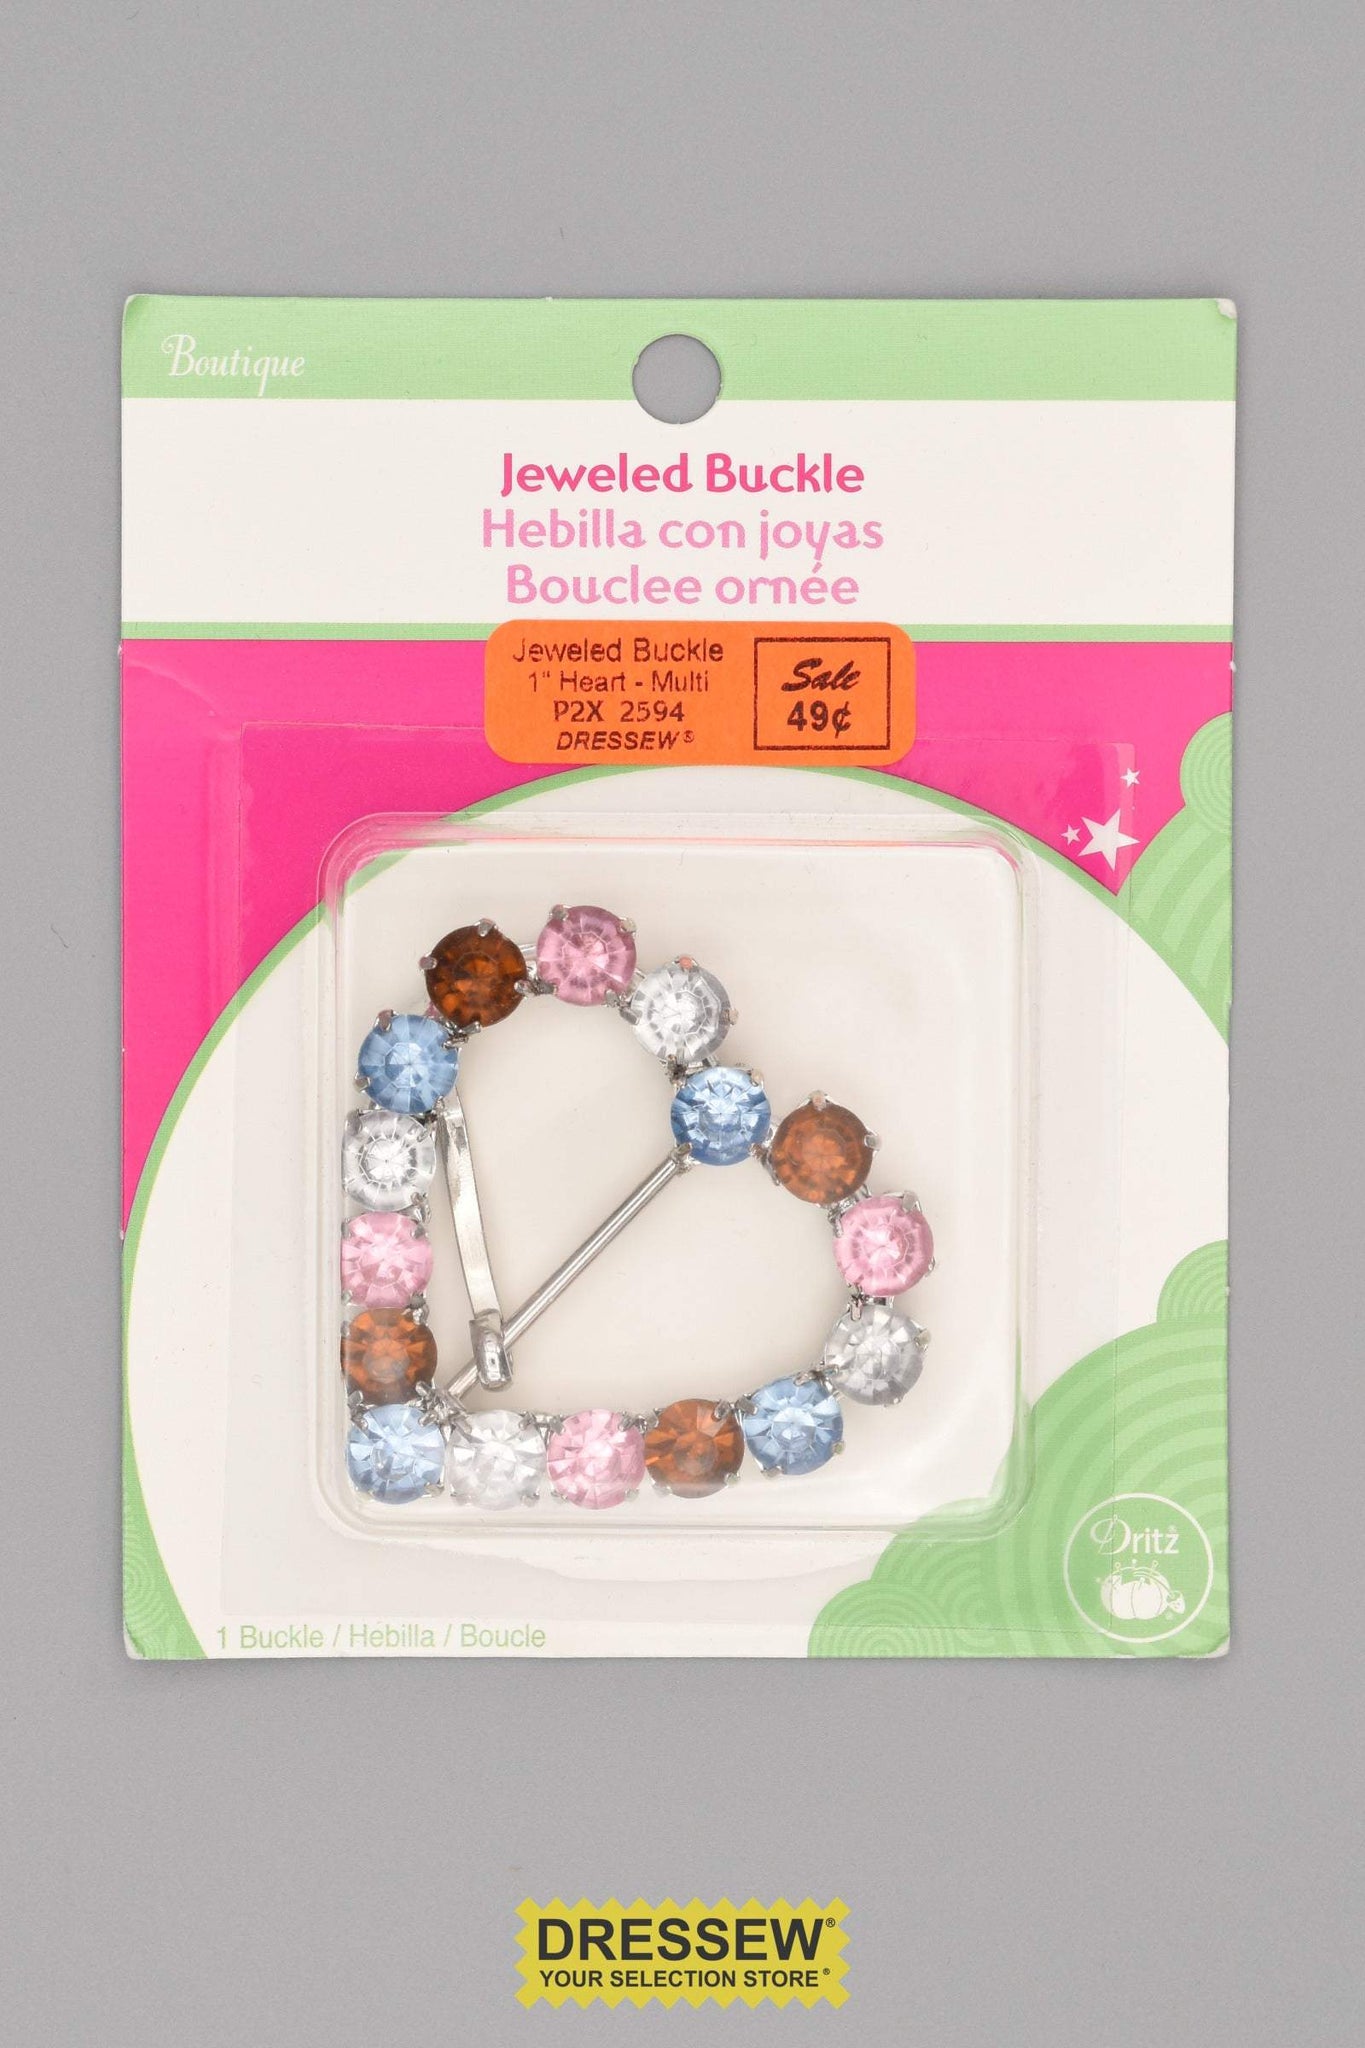 Jeweled Buckle Heart Multi